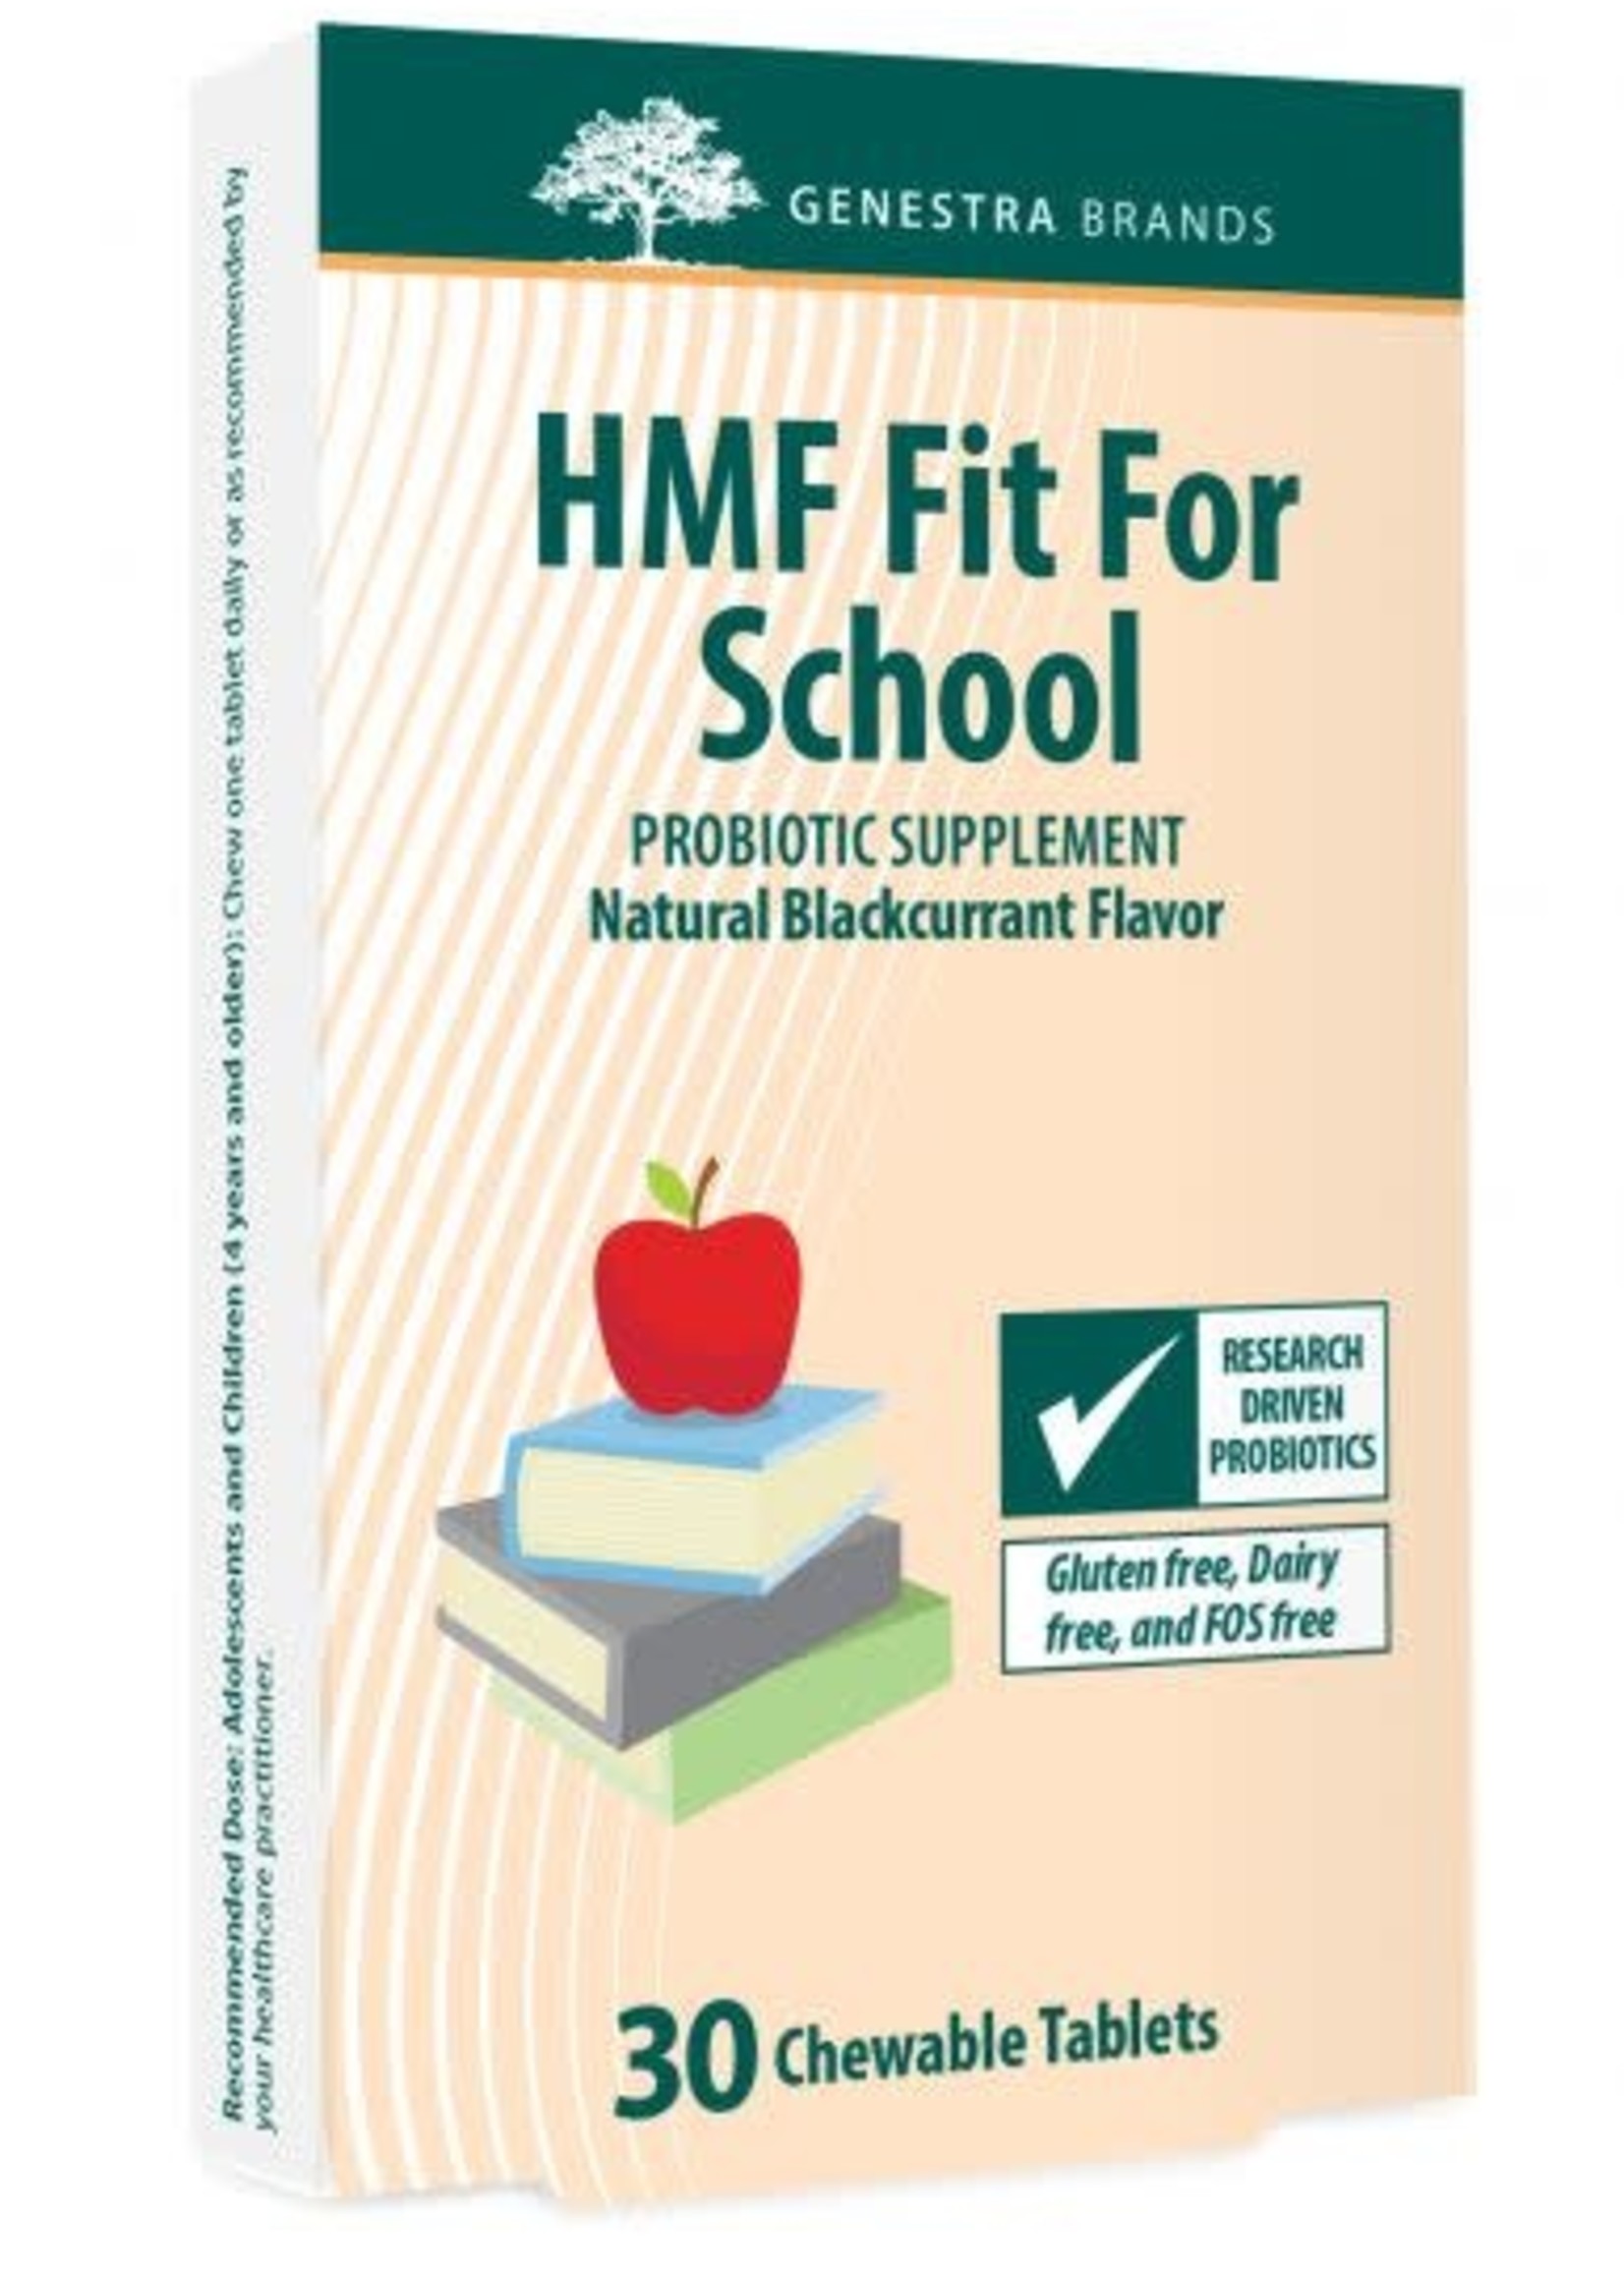 HMF FIT 4 SCHOOL PROBIOTIC